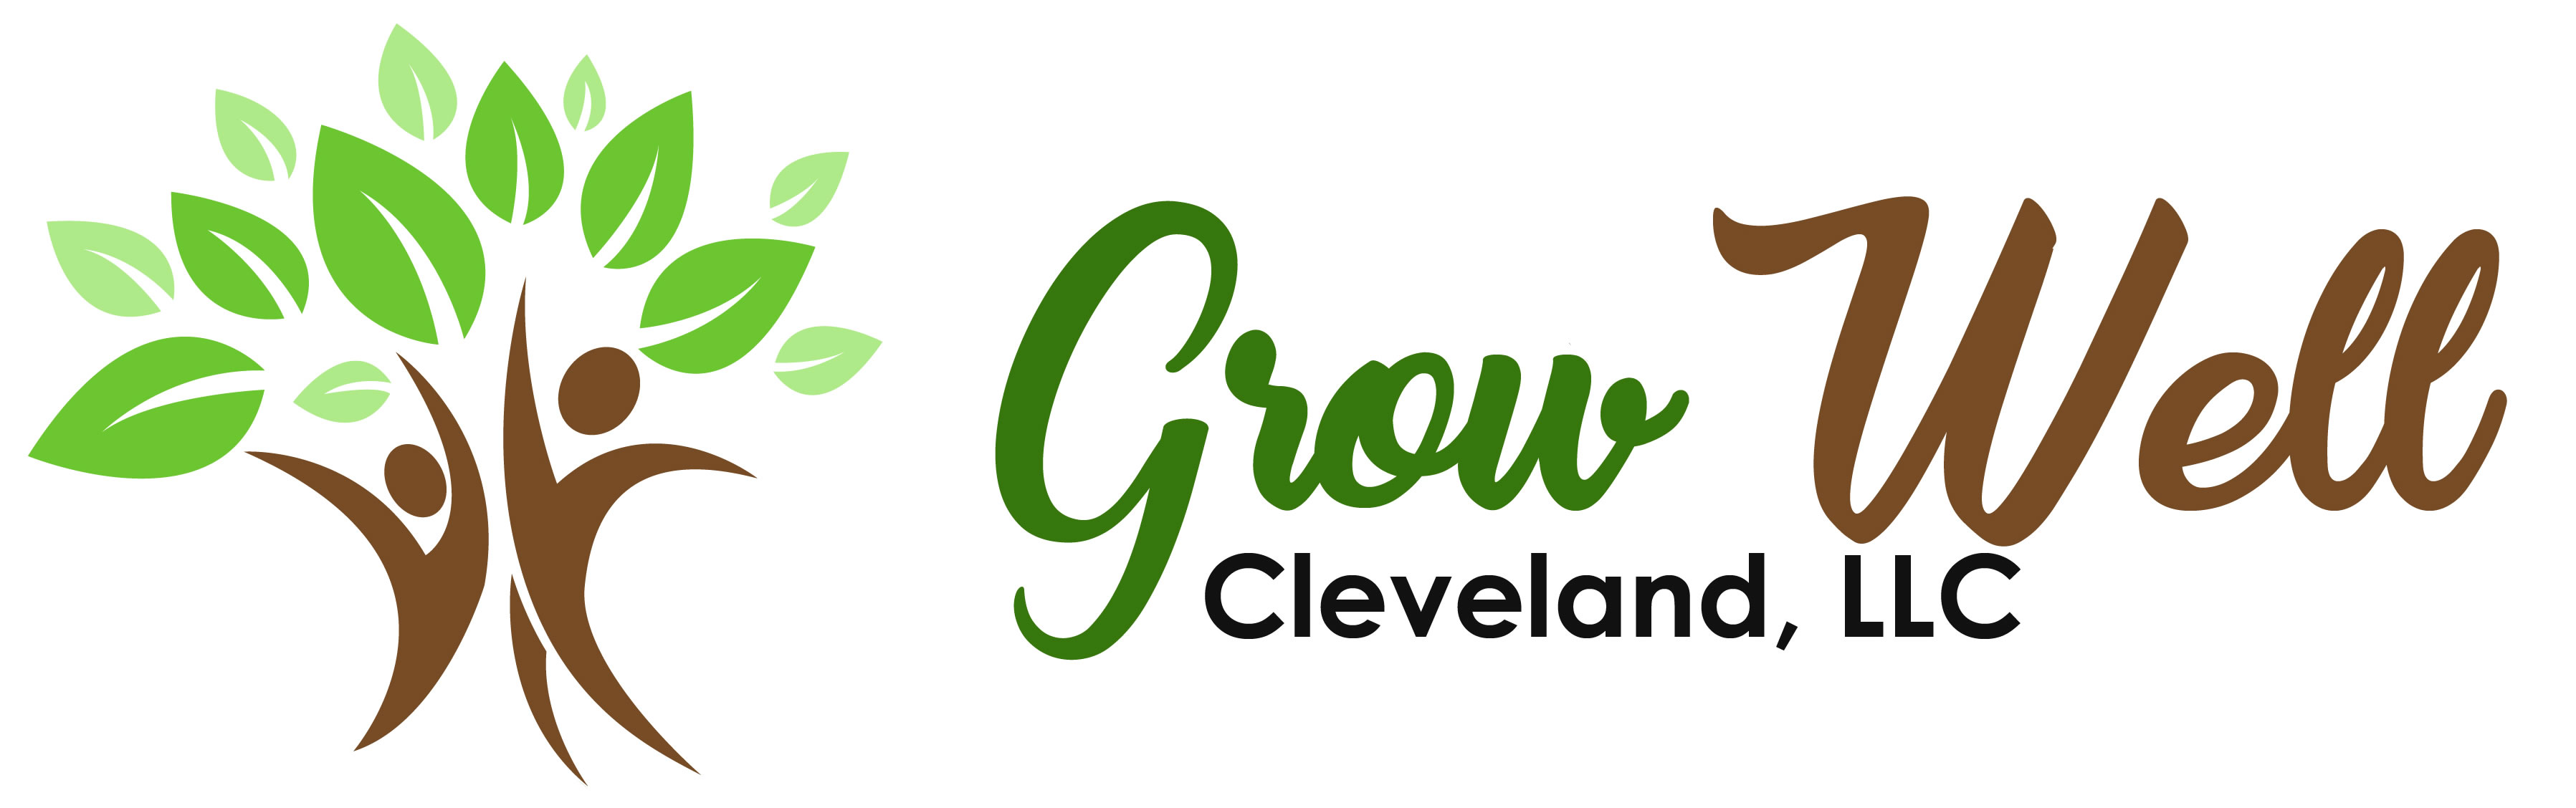 Grow Well Cleveland